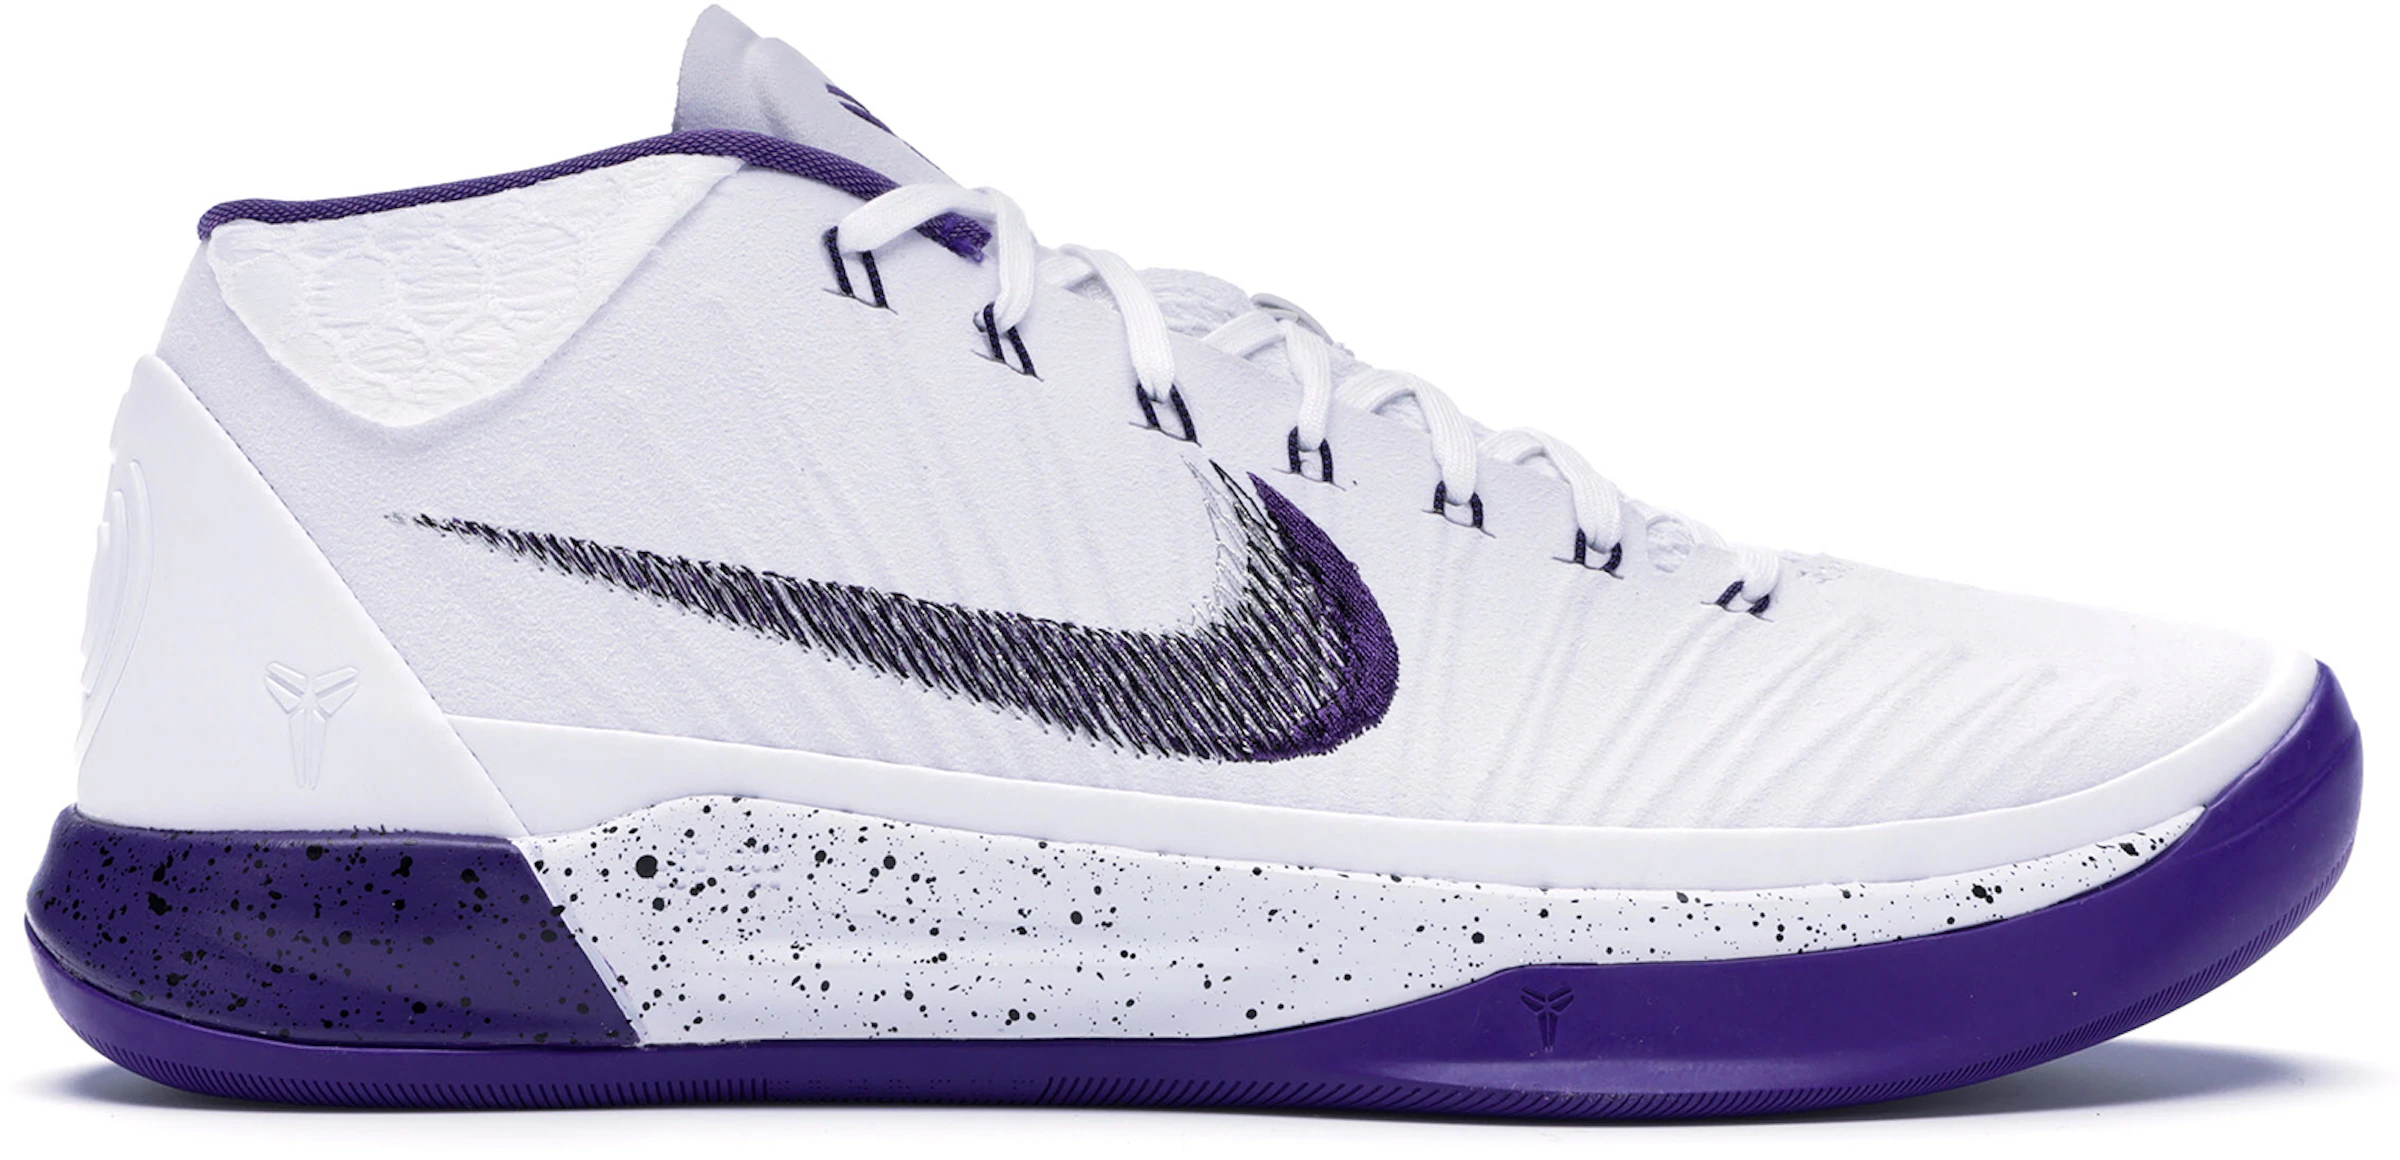 Nike Kobe A.D. Mid Baseline White Court Purple - 922482-100 - Us